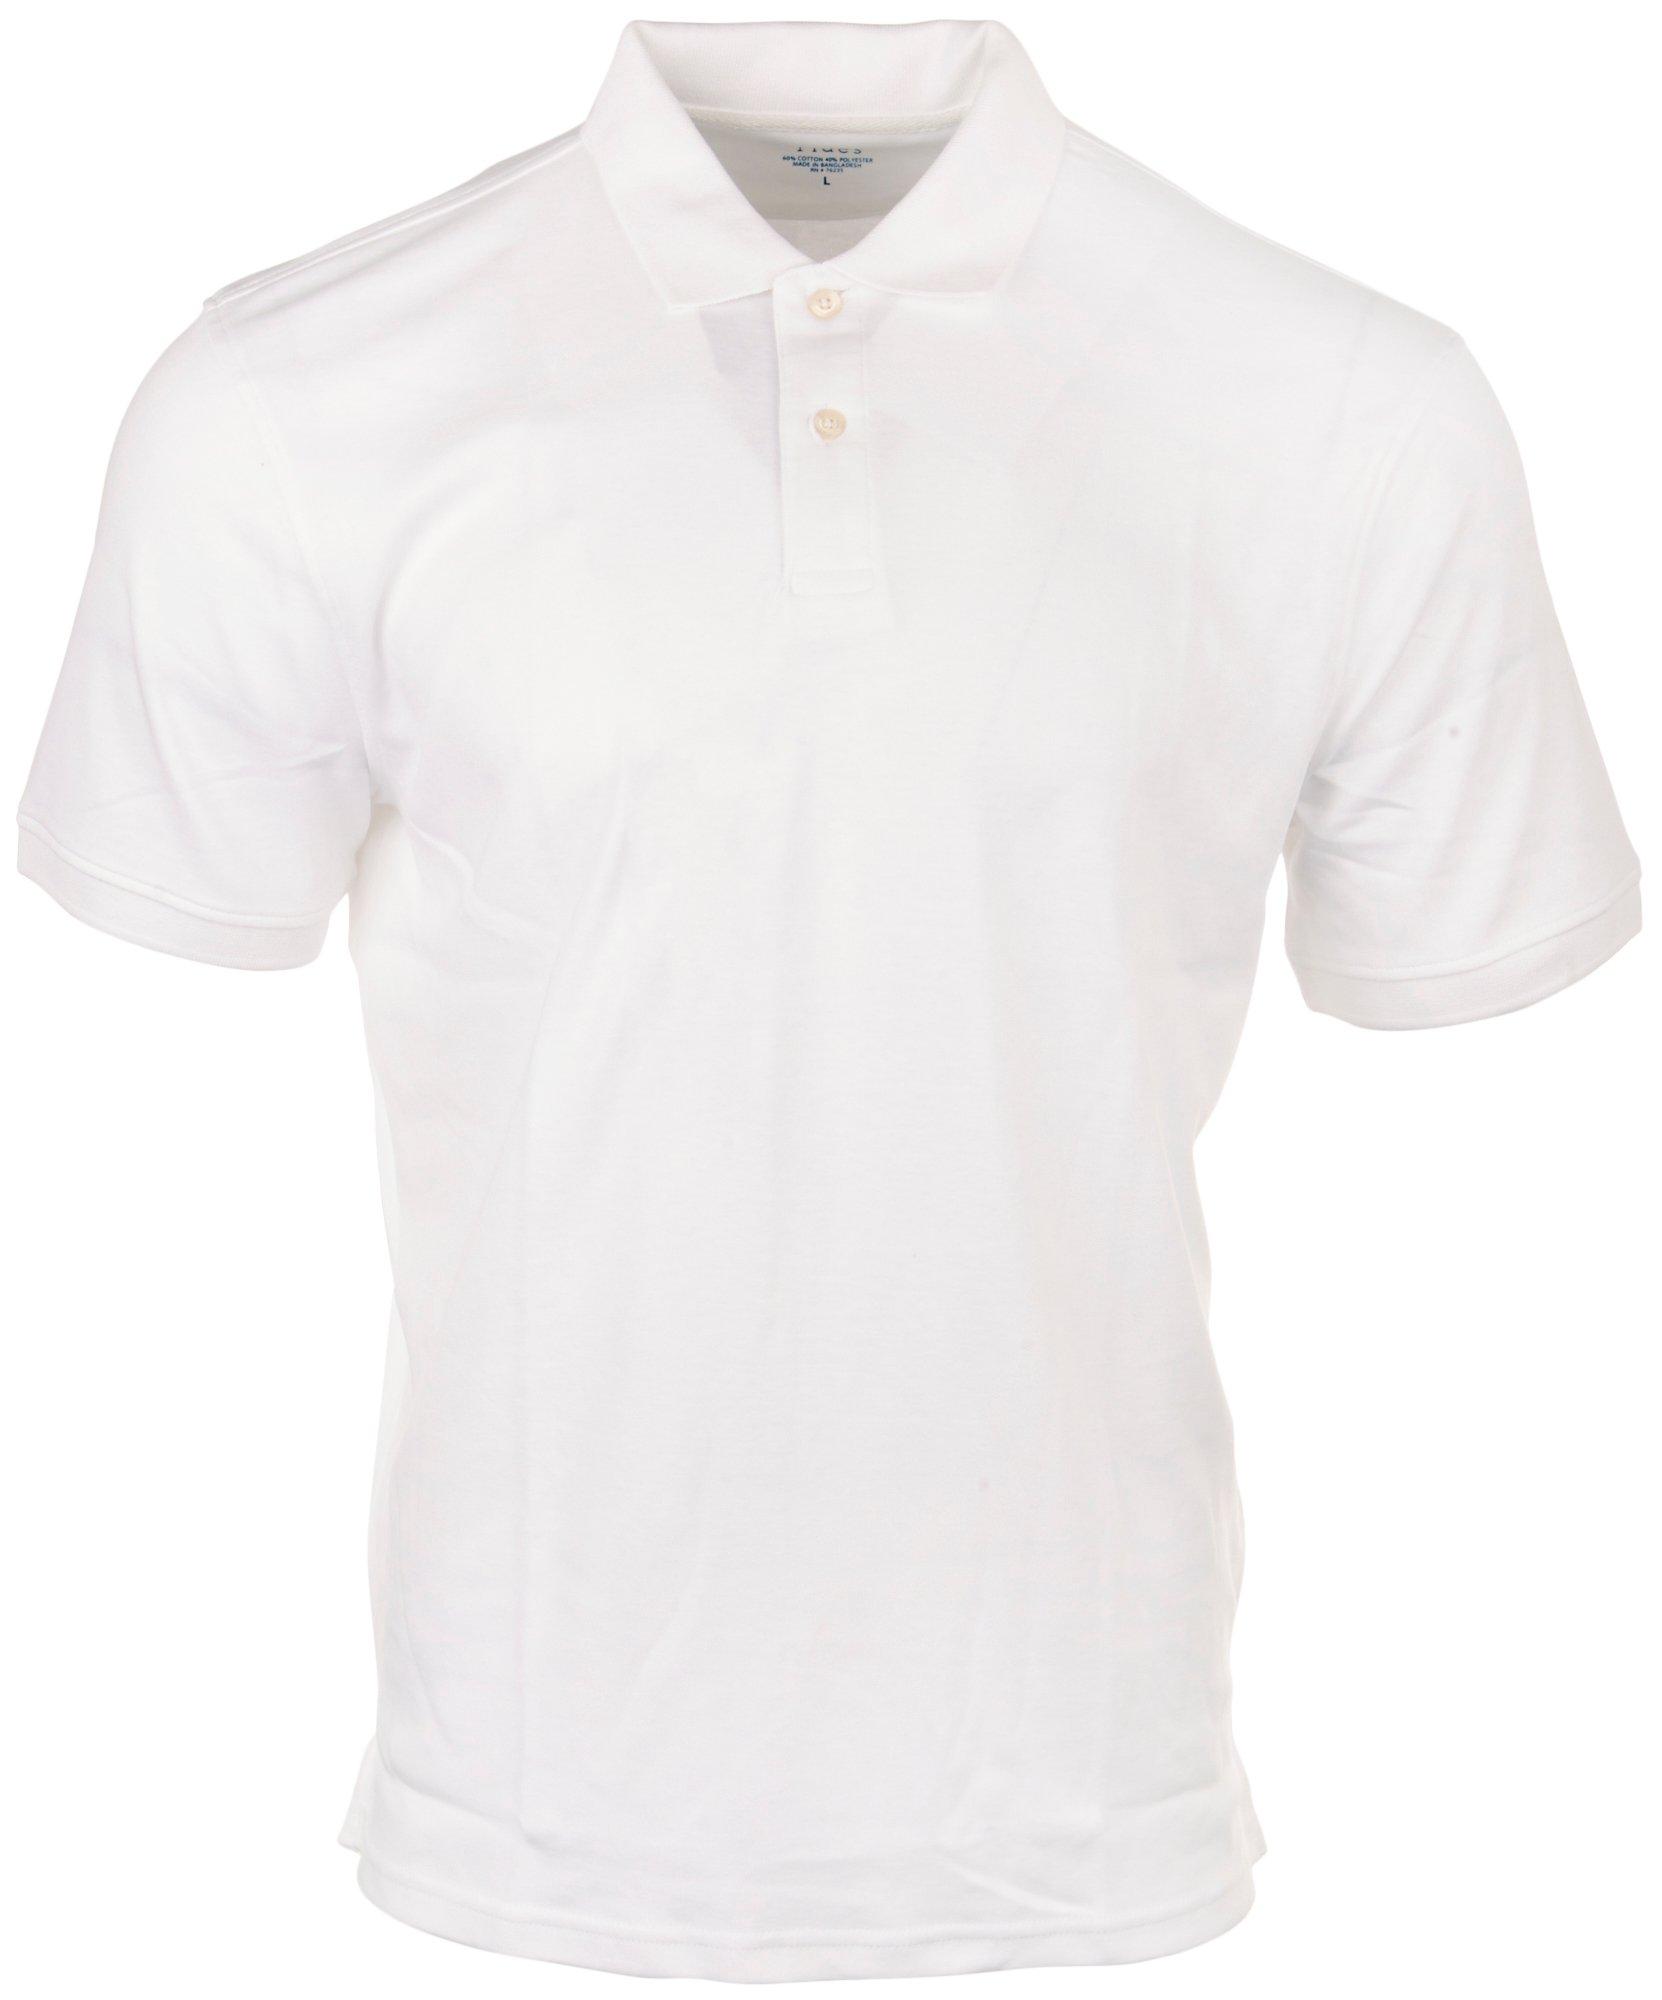 Mens Solid Short Sleeve Polo Shirt